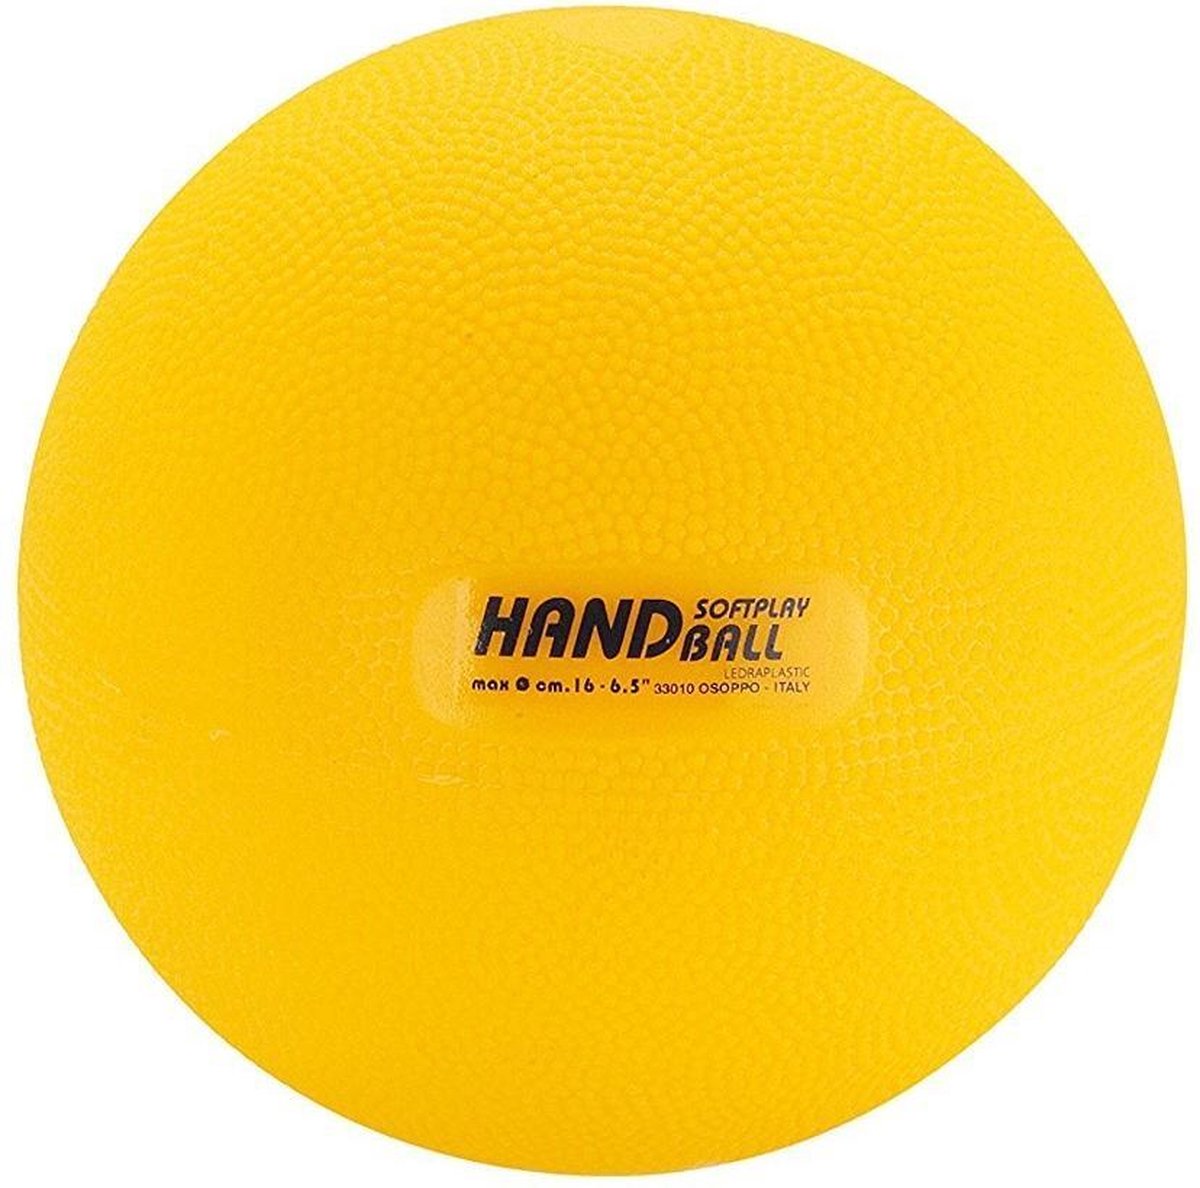 Lichtgewichtbal Softplay: handbal 180 g, 16 cm, geel